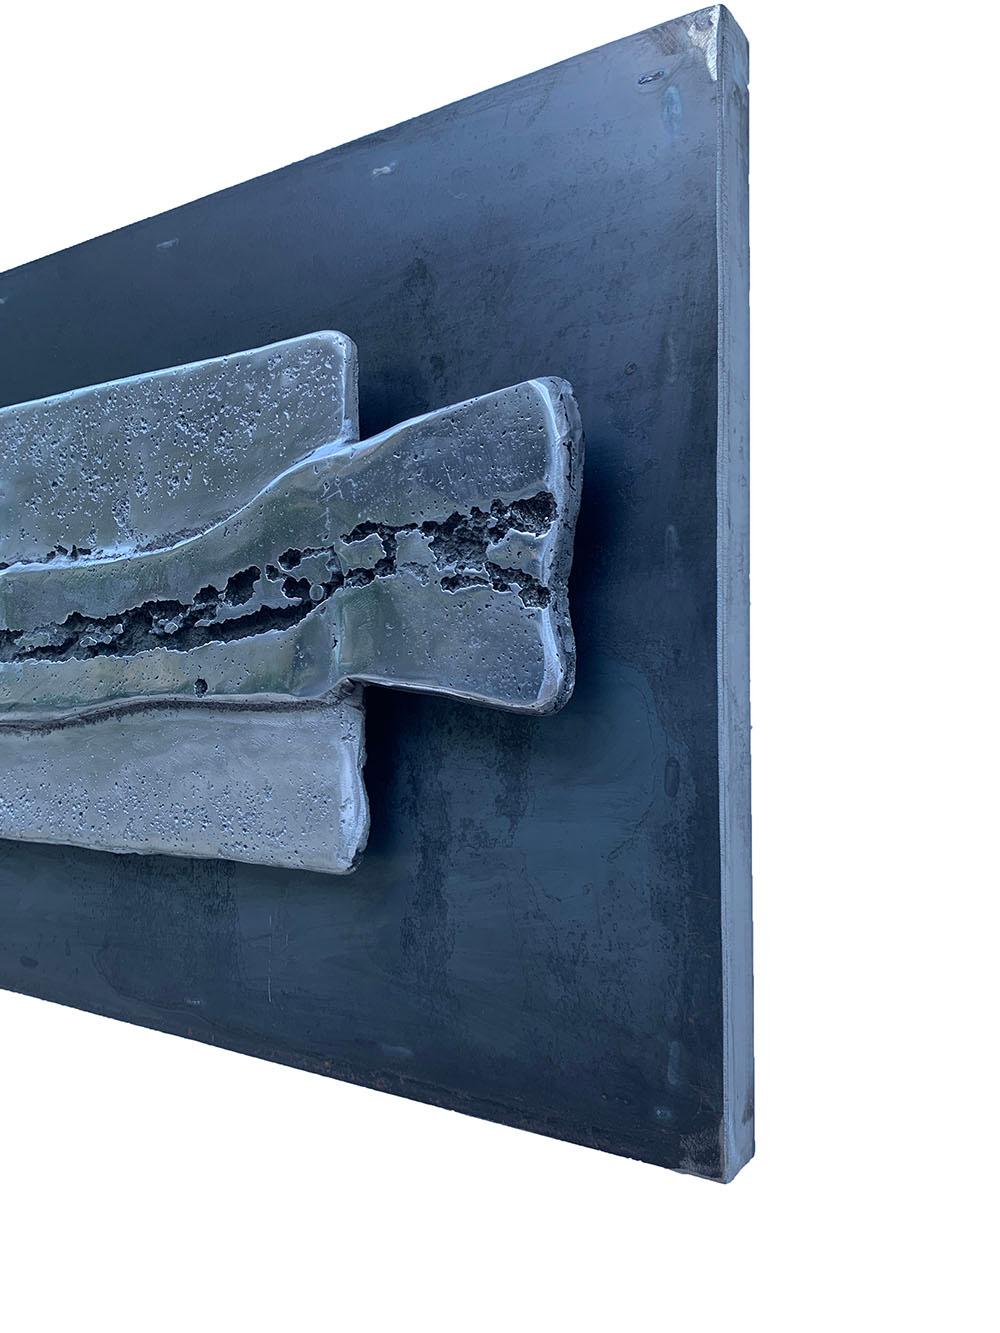  Modern Mural Steel Aluminium Outdoor Abstract Wall Sculpture Black, Silver - Blue Abstract Sculpture by David Marshall